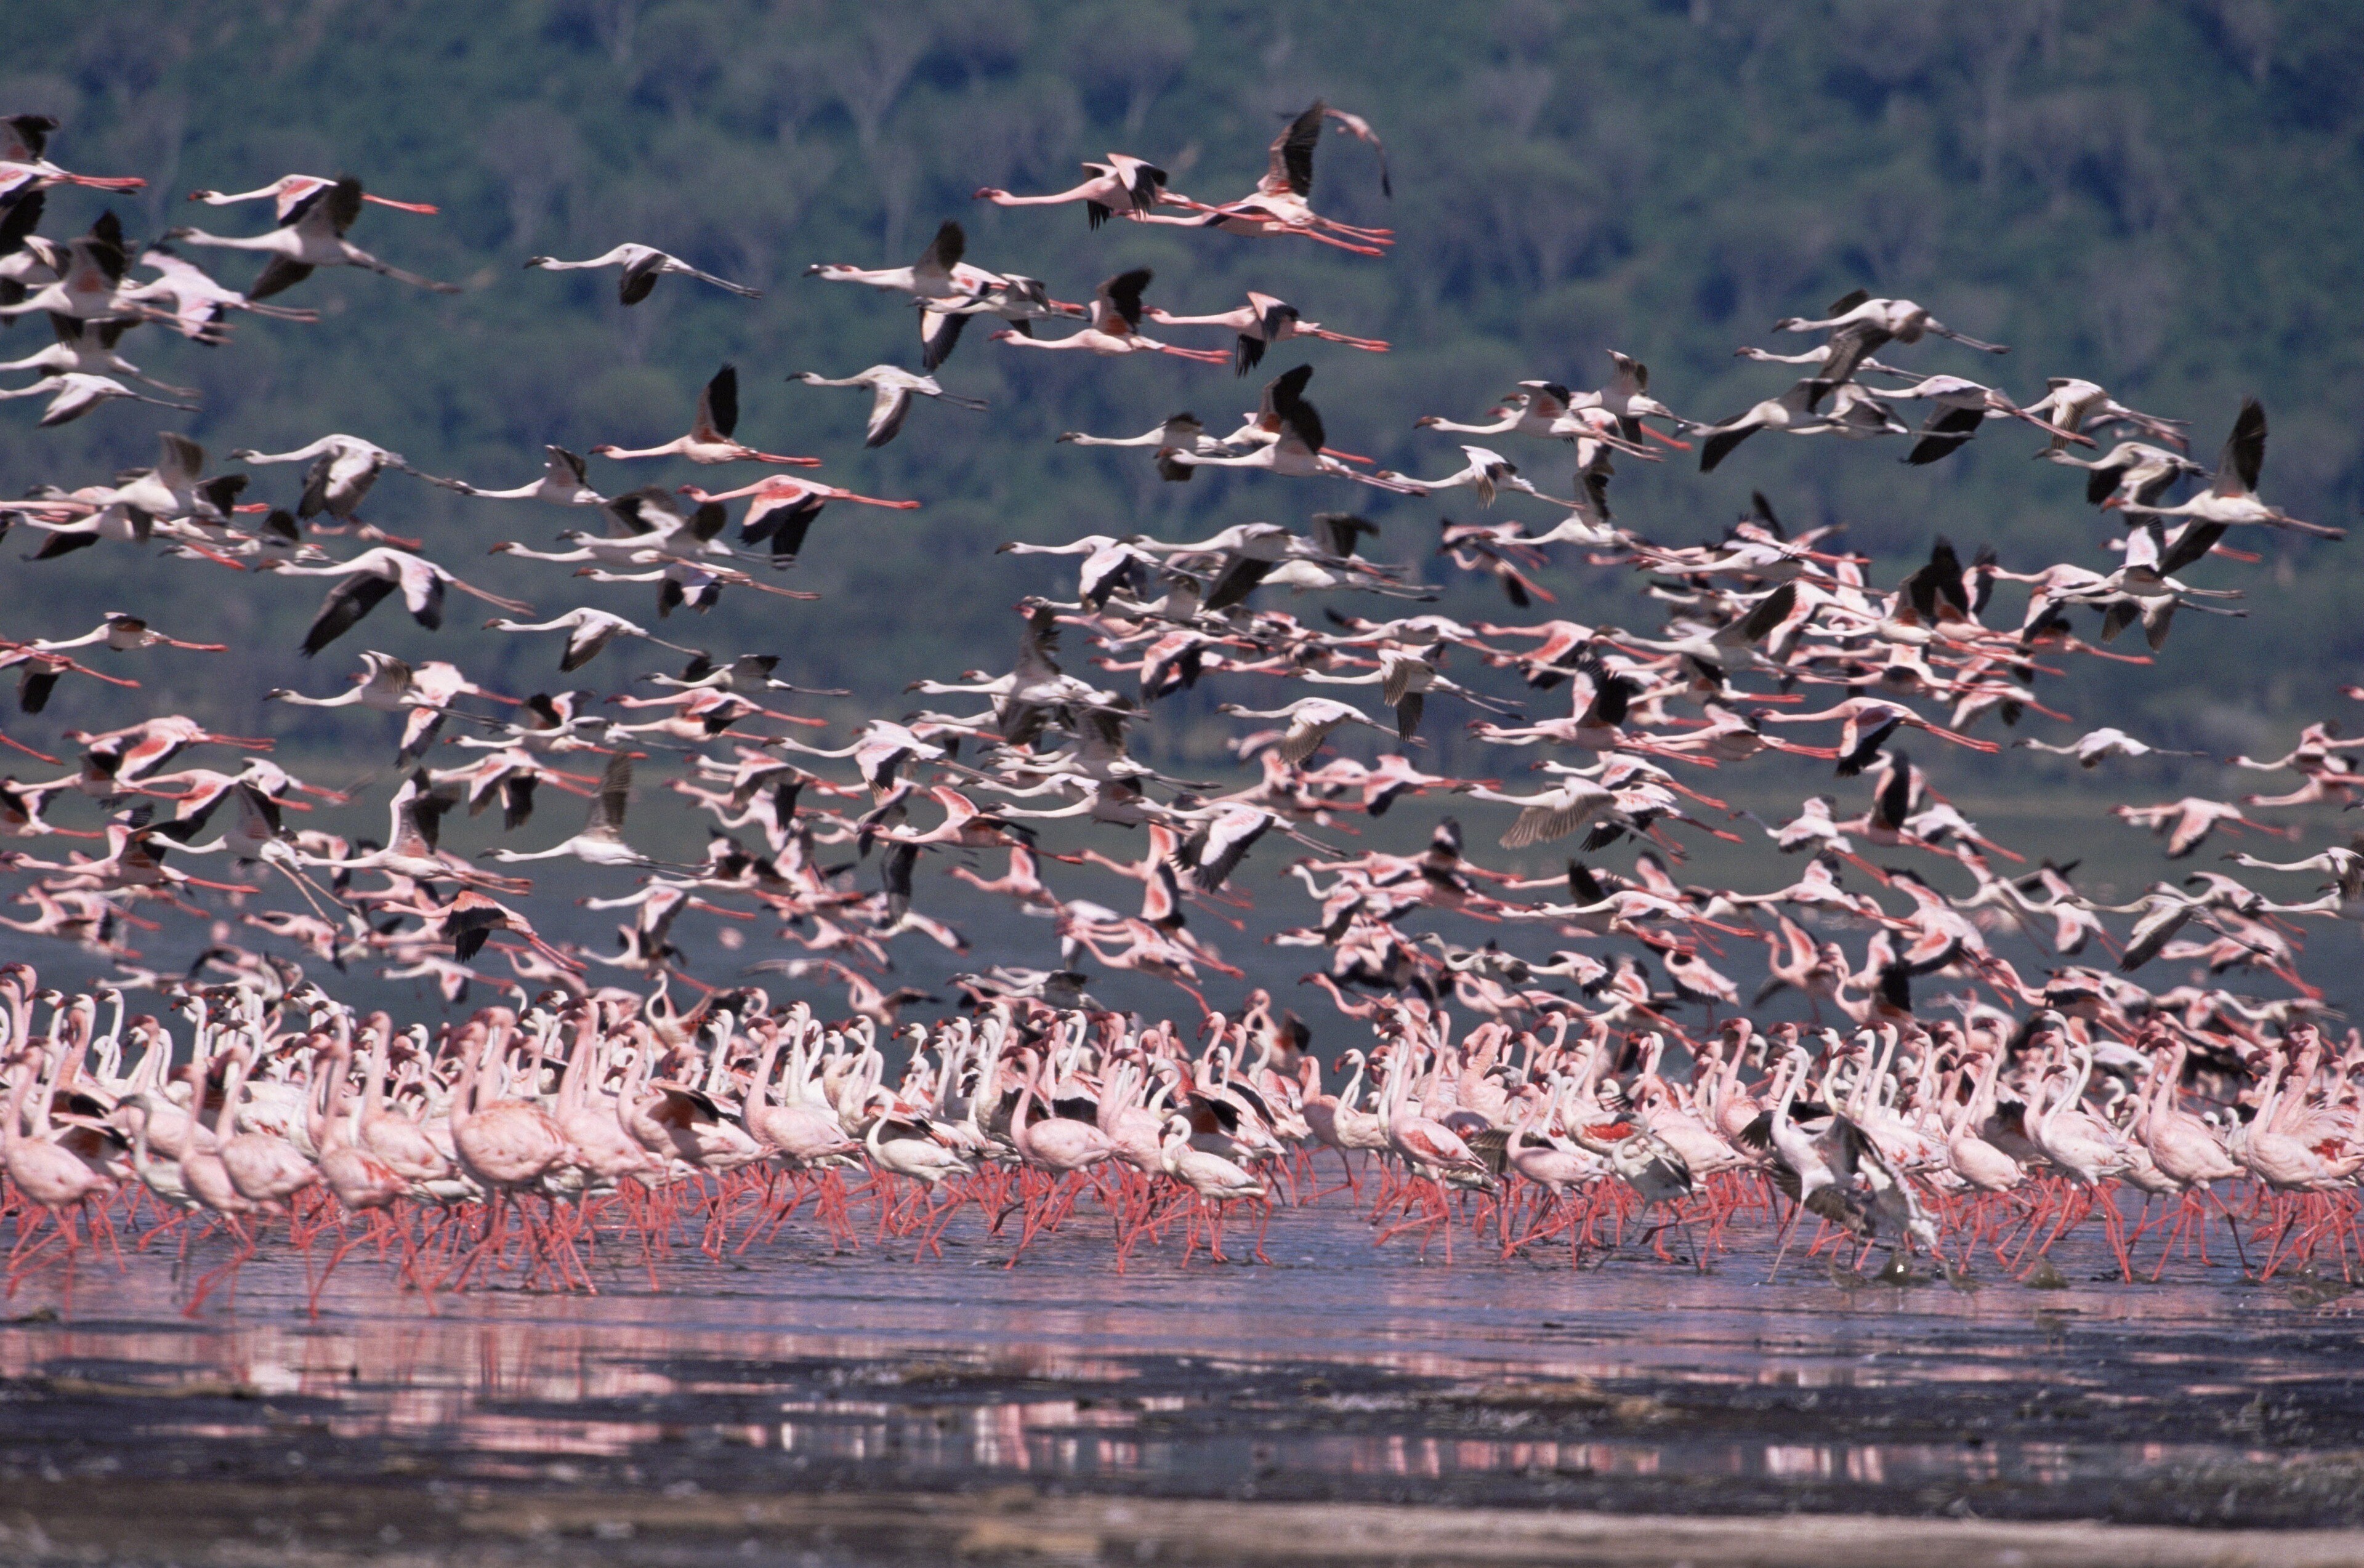 Dozens of flamingos take flight as their reflections glisten on the water.